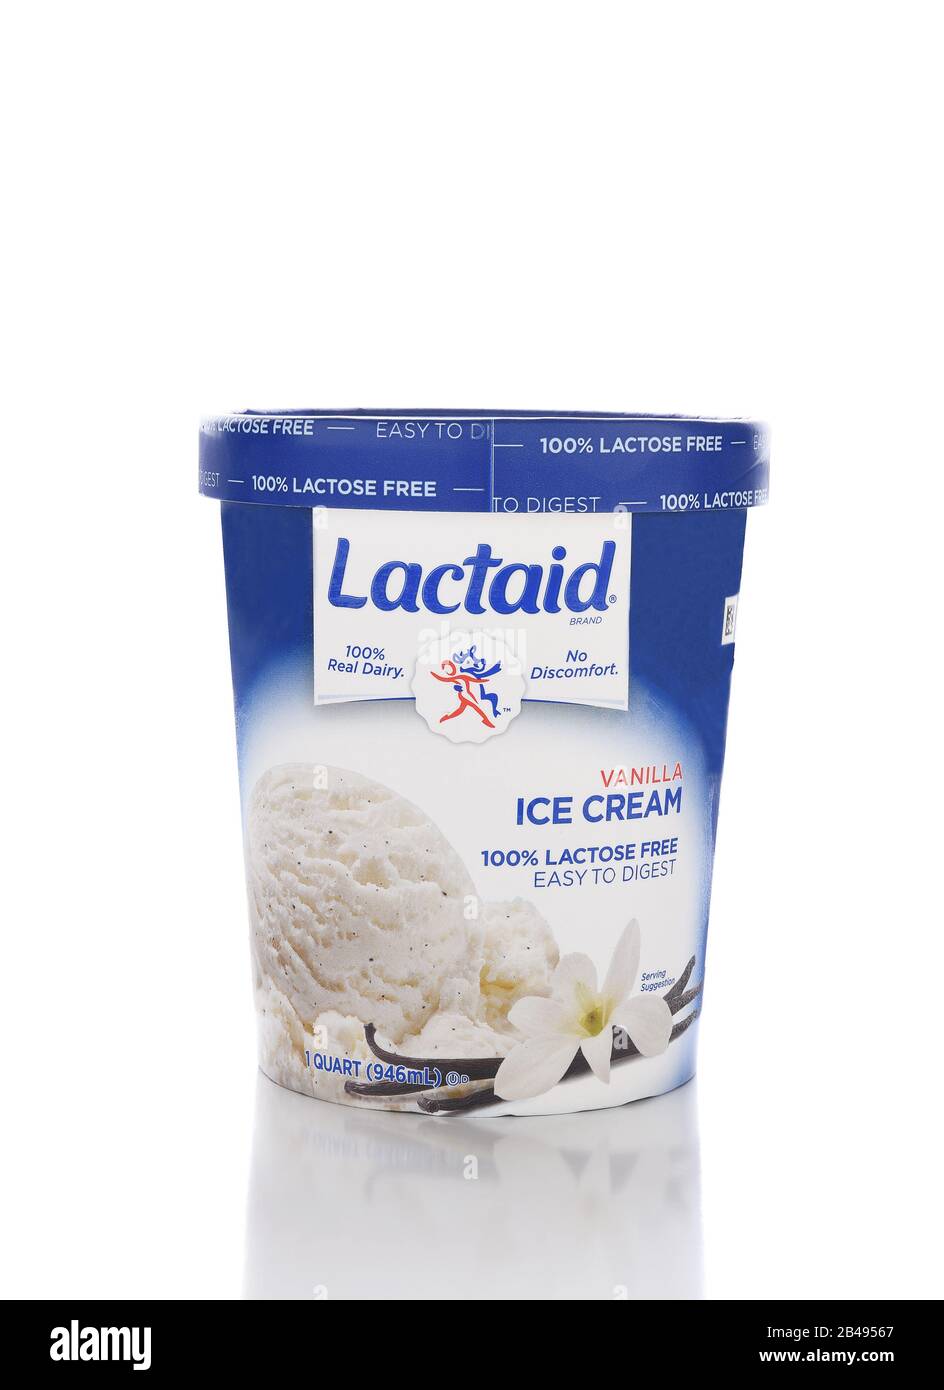 https://c8.alamy.com/comp/2B49567/irvine-california-november-16-2016-a-carton-of-lactaid-lactose-free-vanilla-ice-cream-lactaid-makes-a-full-line-of-lactose-free-dairy-products-2B49567.jpg